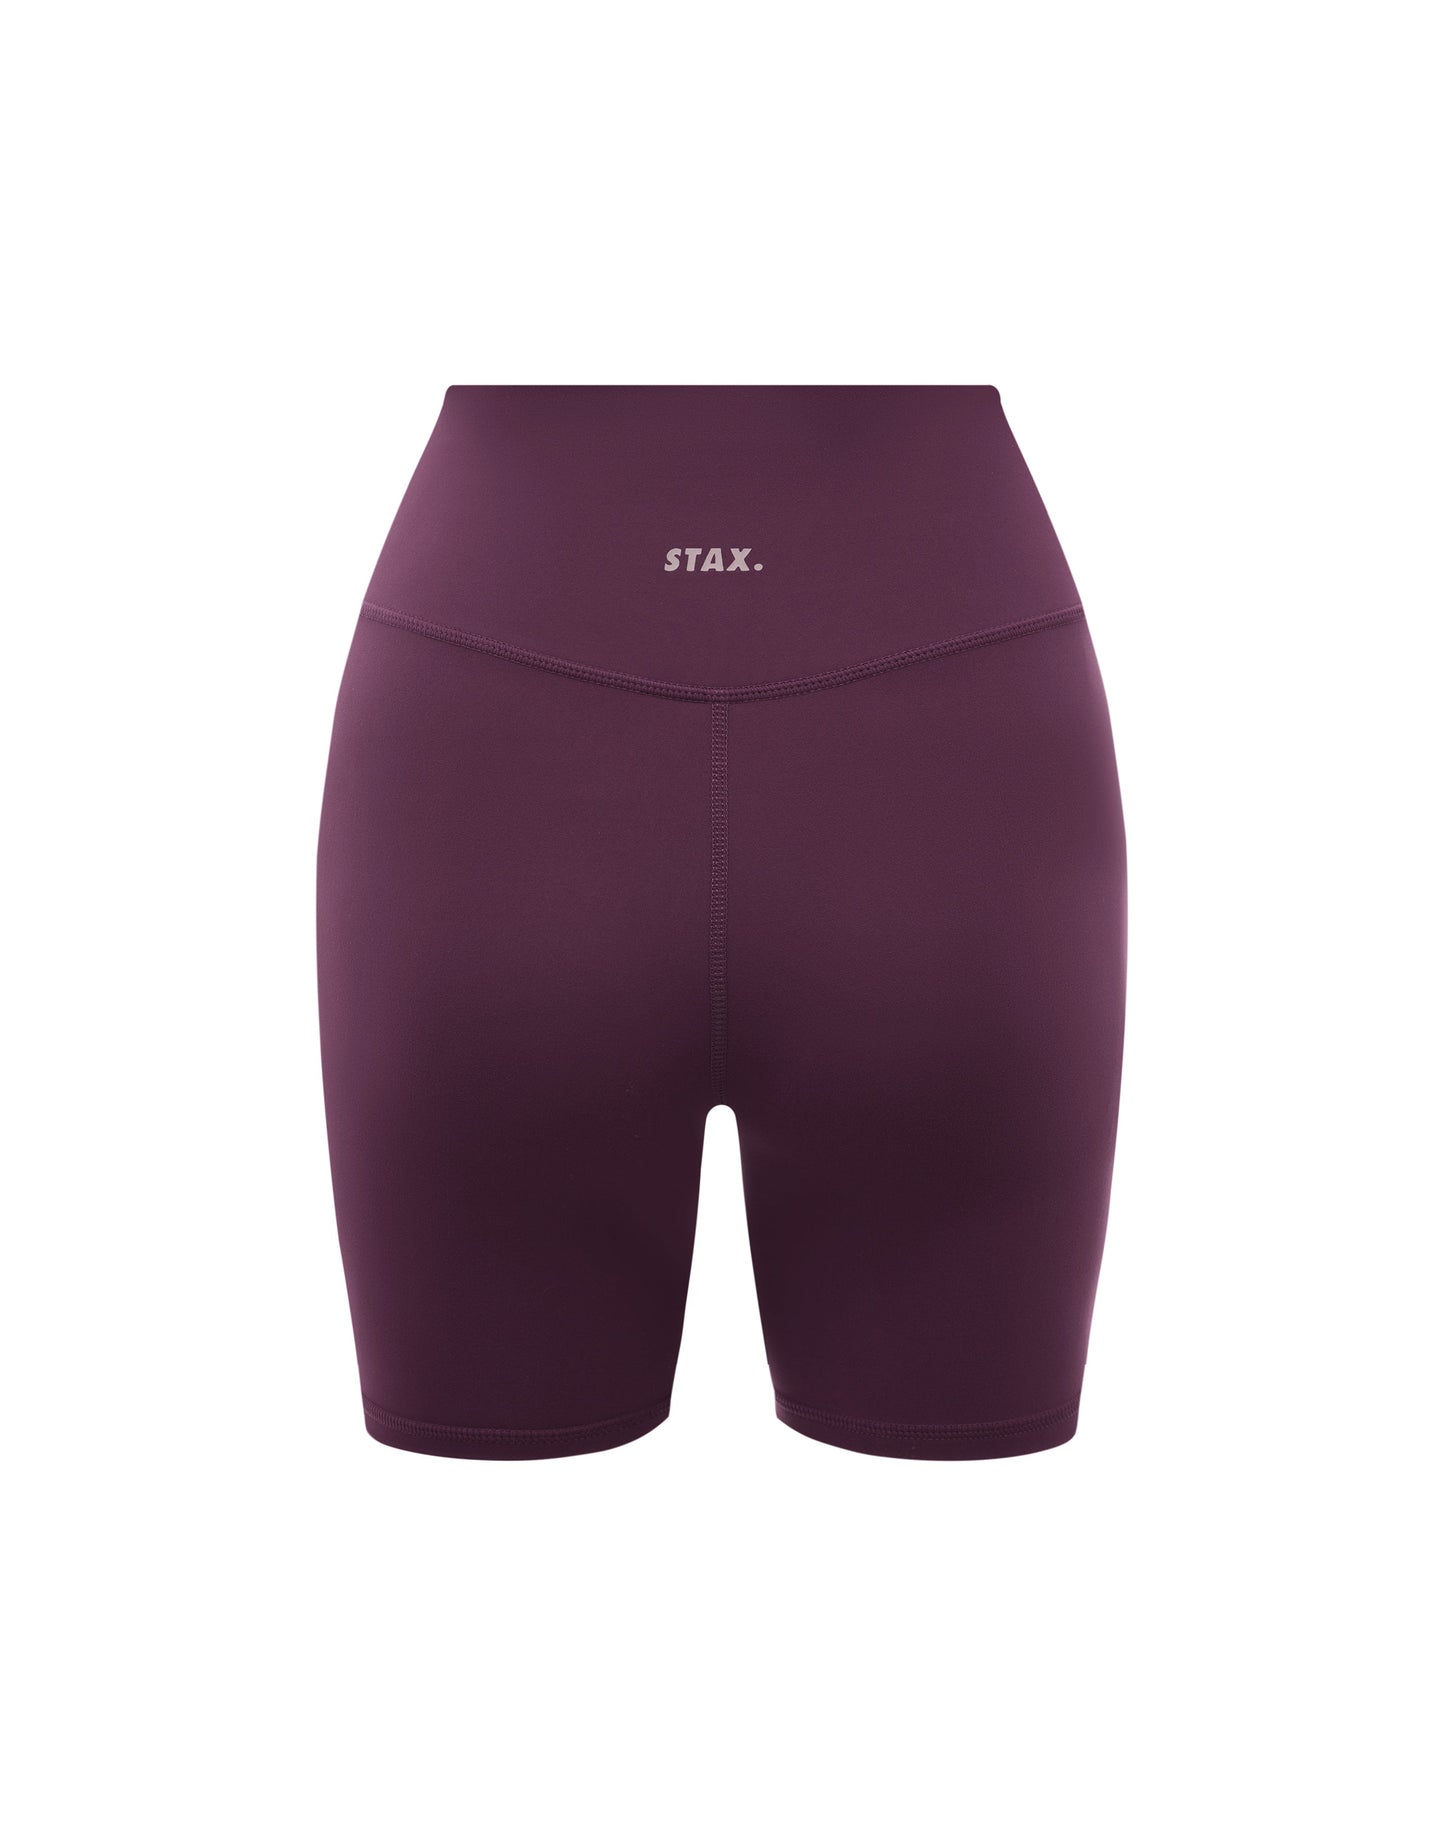 Midi Bike Shorts NANDEX ™ Iris - Purple